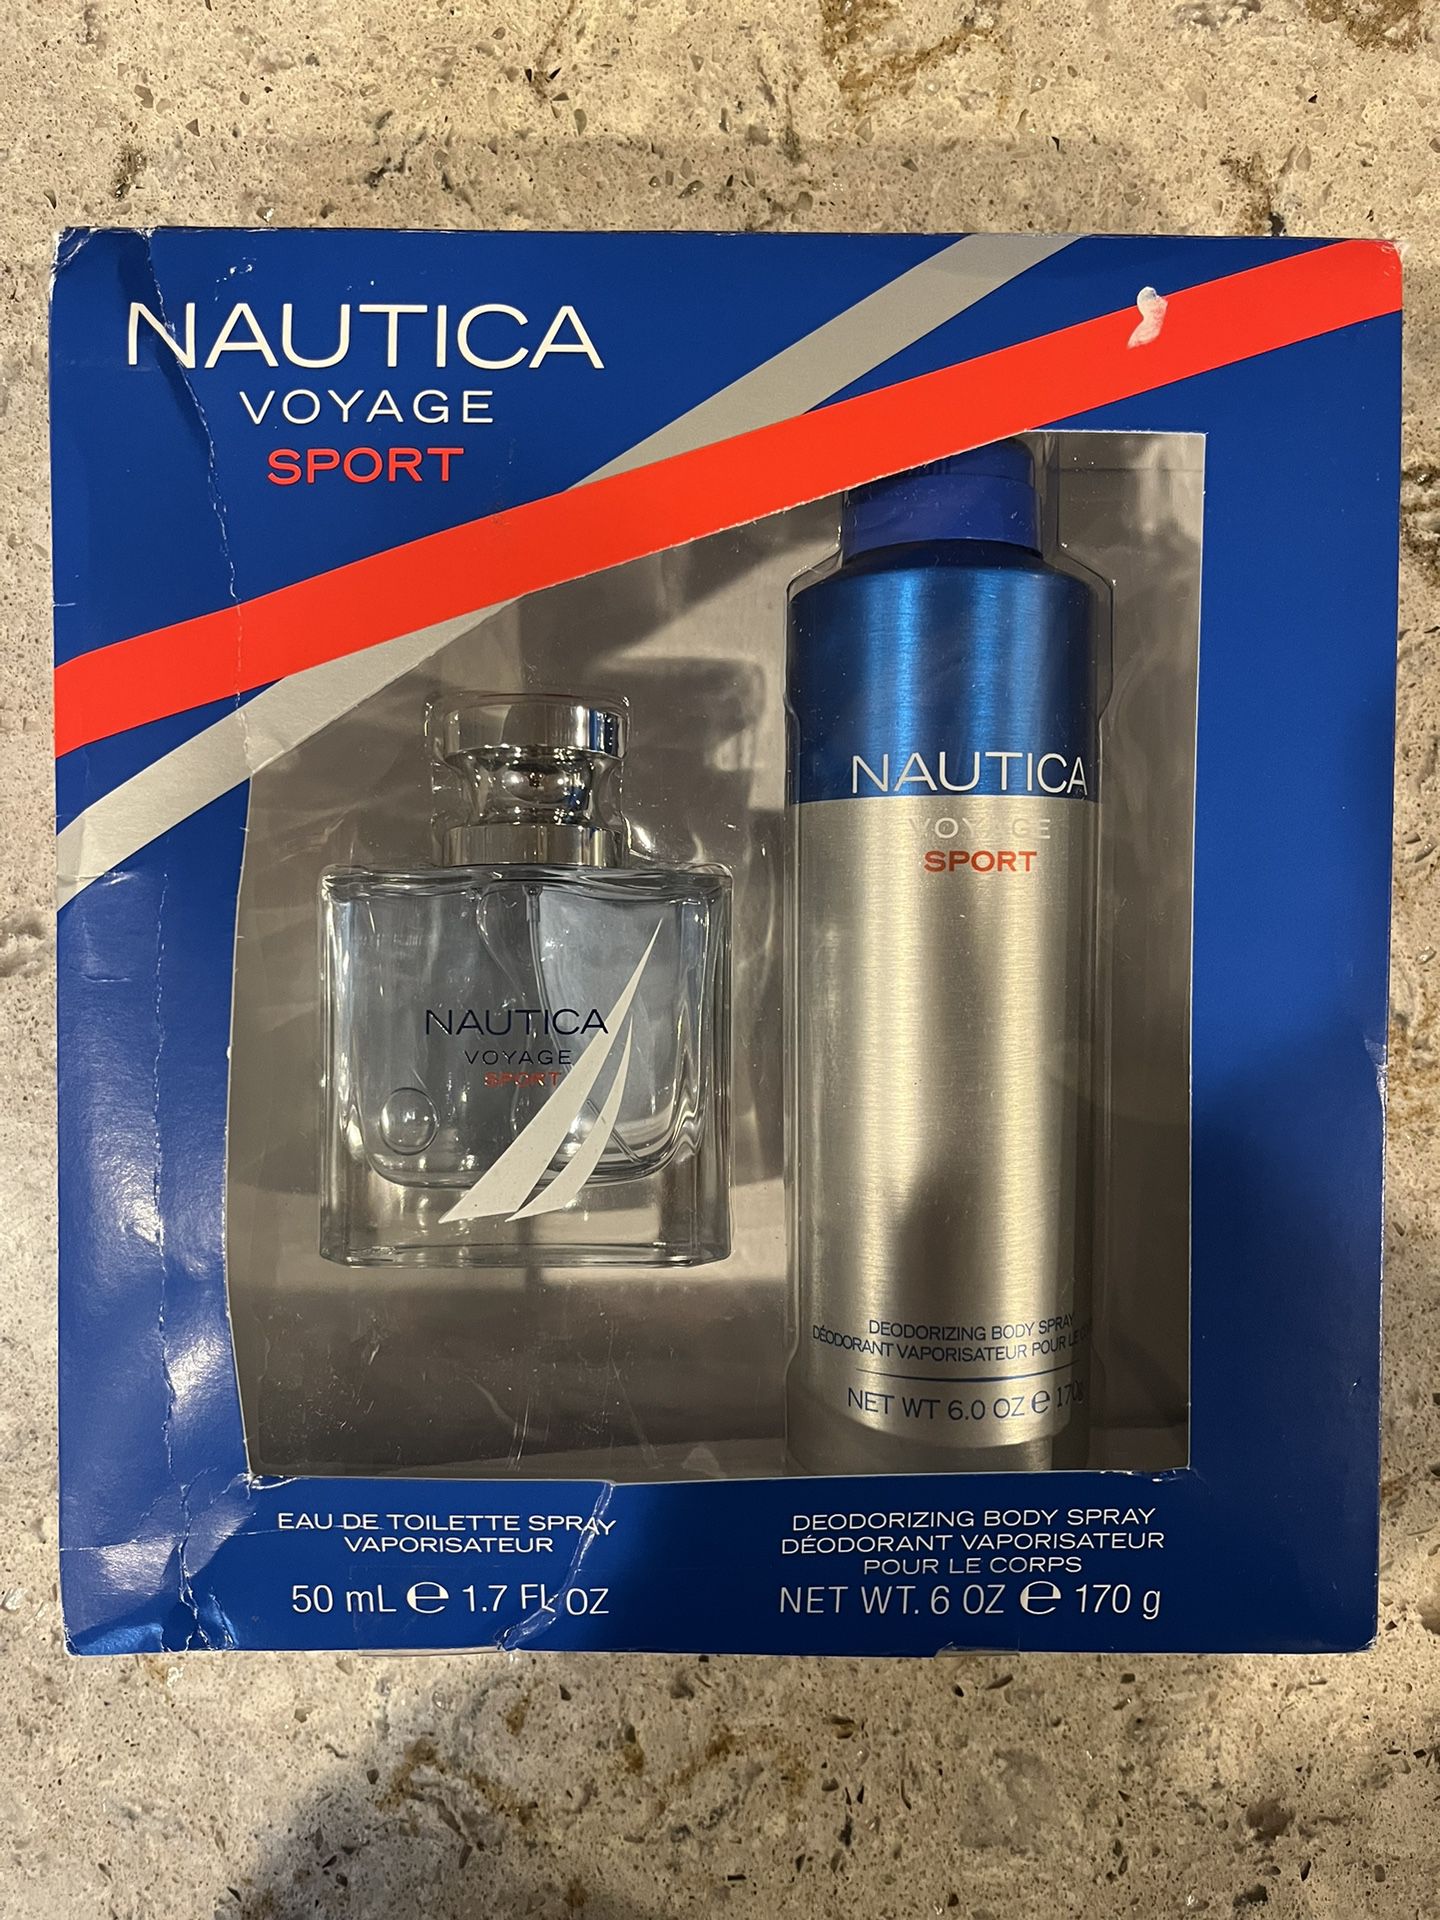 Nautica Voyage Sport Eau De Toilette & 6 oz. Deodorant Body Spray, Gift Set for Men - Brand New - Fair Box 